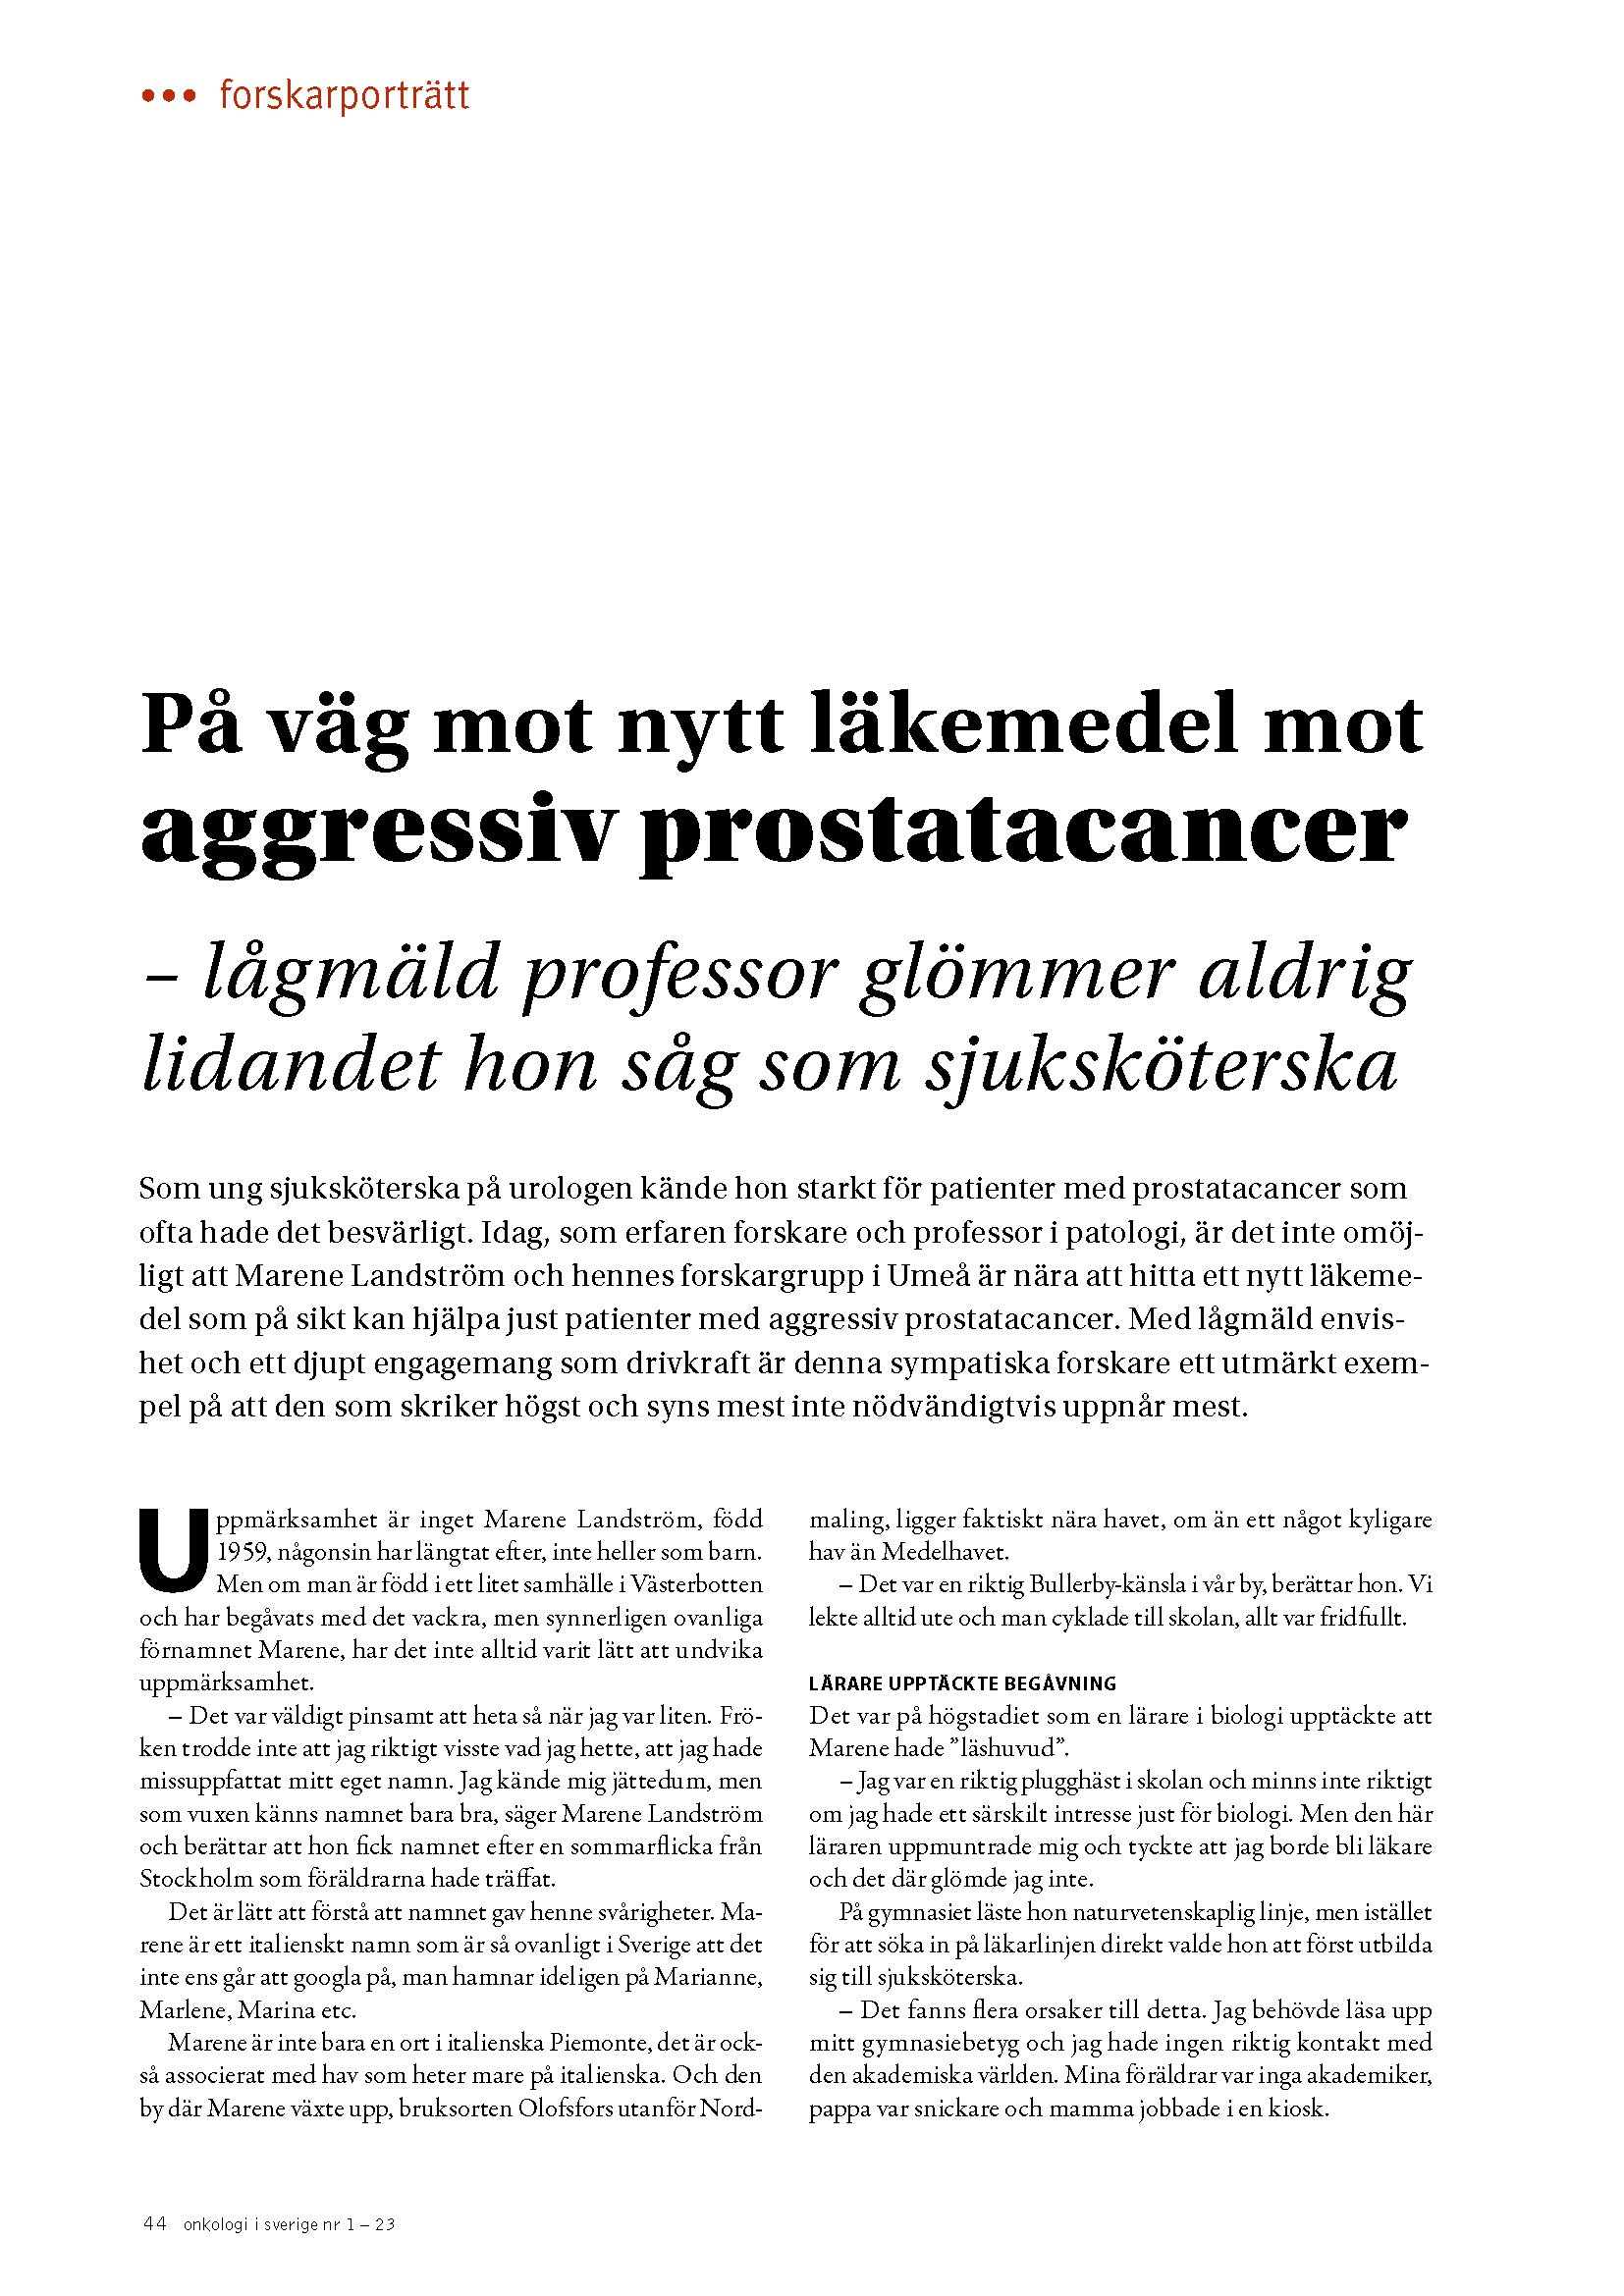 Onkologi i Sverige nr 1 - 23 